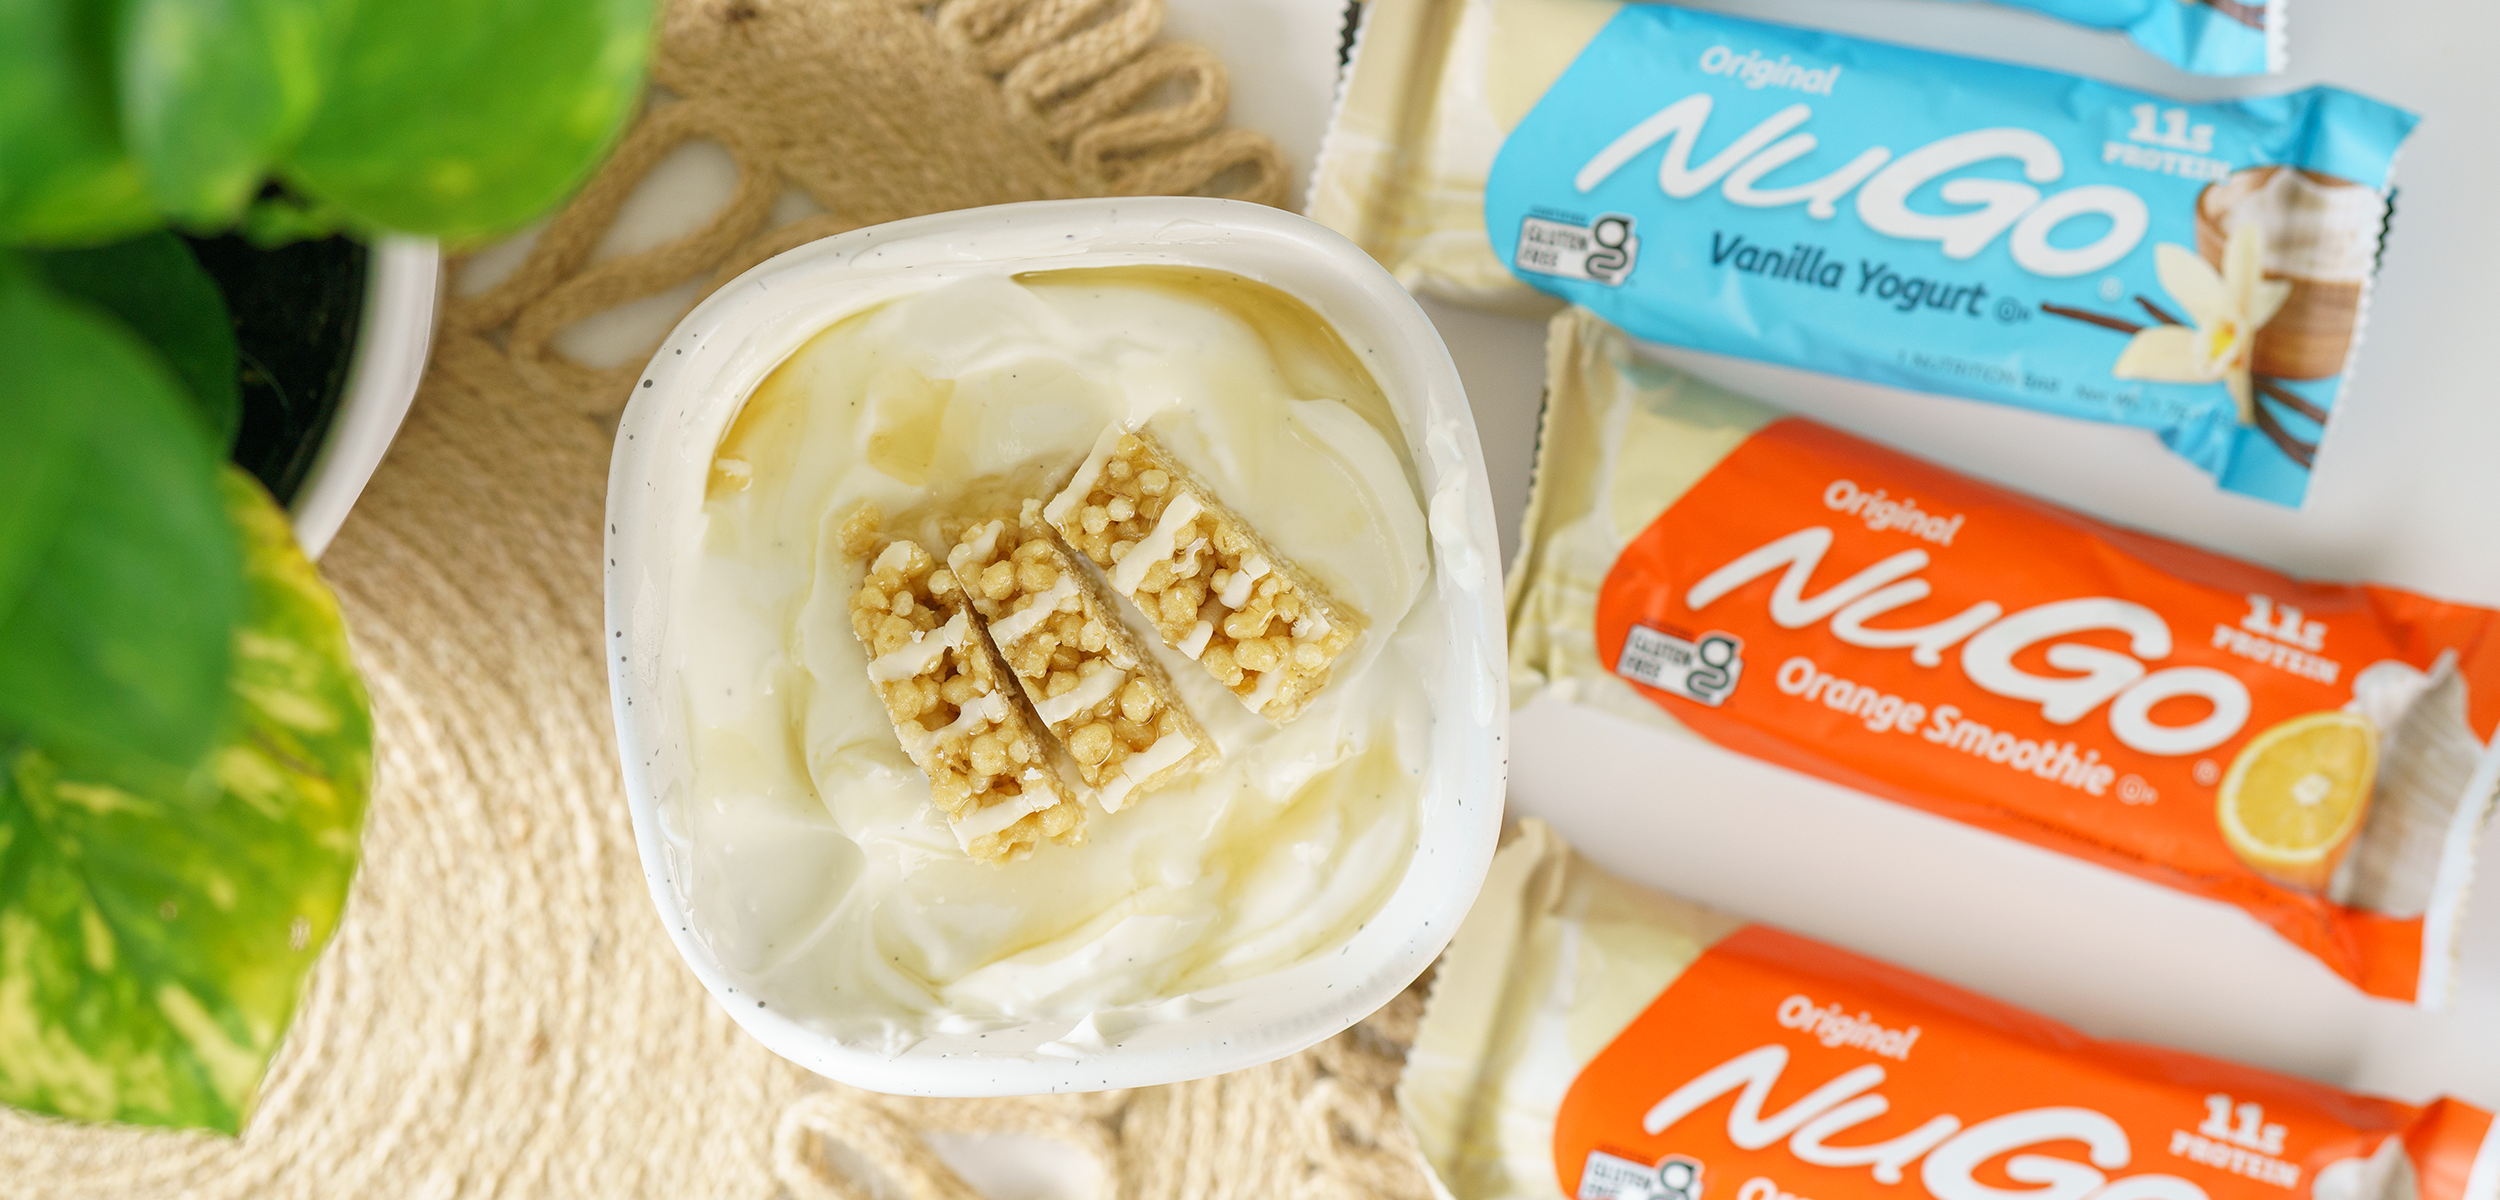 NuGo Original Vanilla Yogurt and Orange Smoothie next to cup of yogurt with cut bars on top